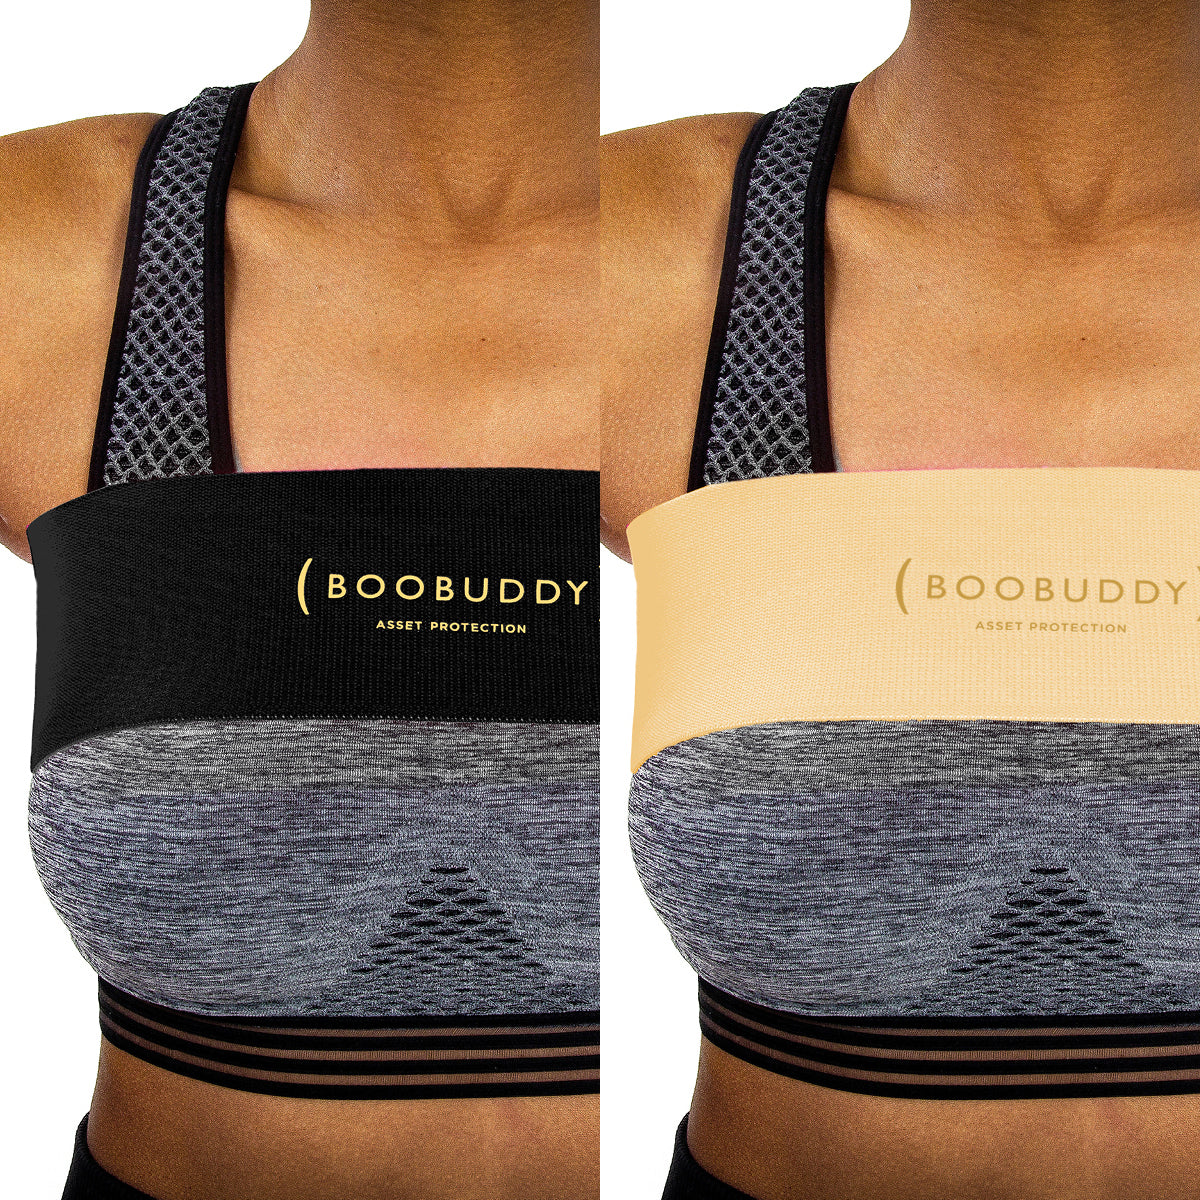 Boobuddy Adjustable Breast Support Band | Beige & Black Bundle | How to Wear a Boobuddy